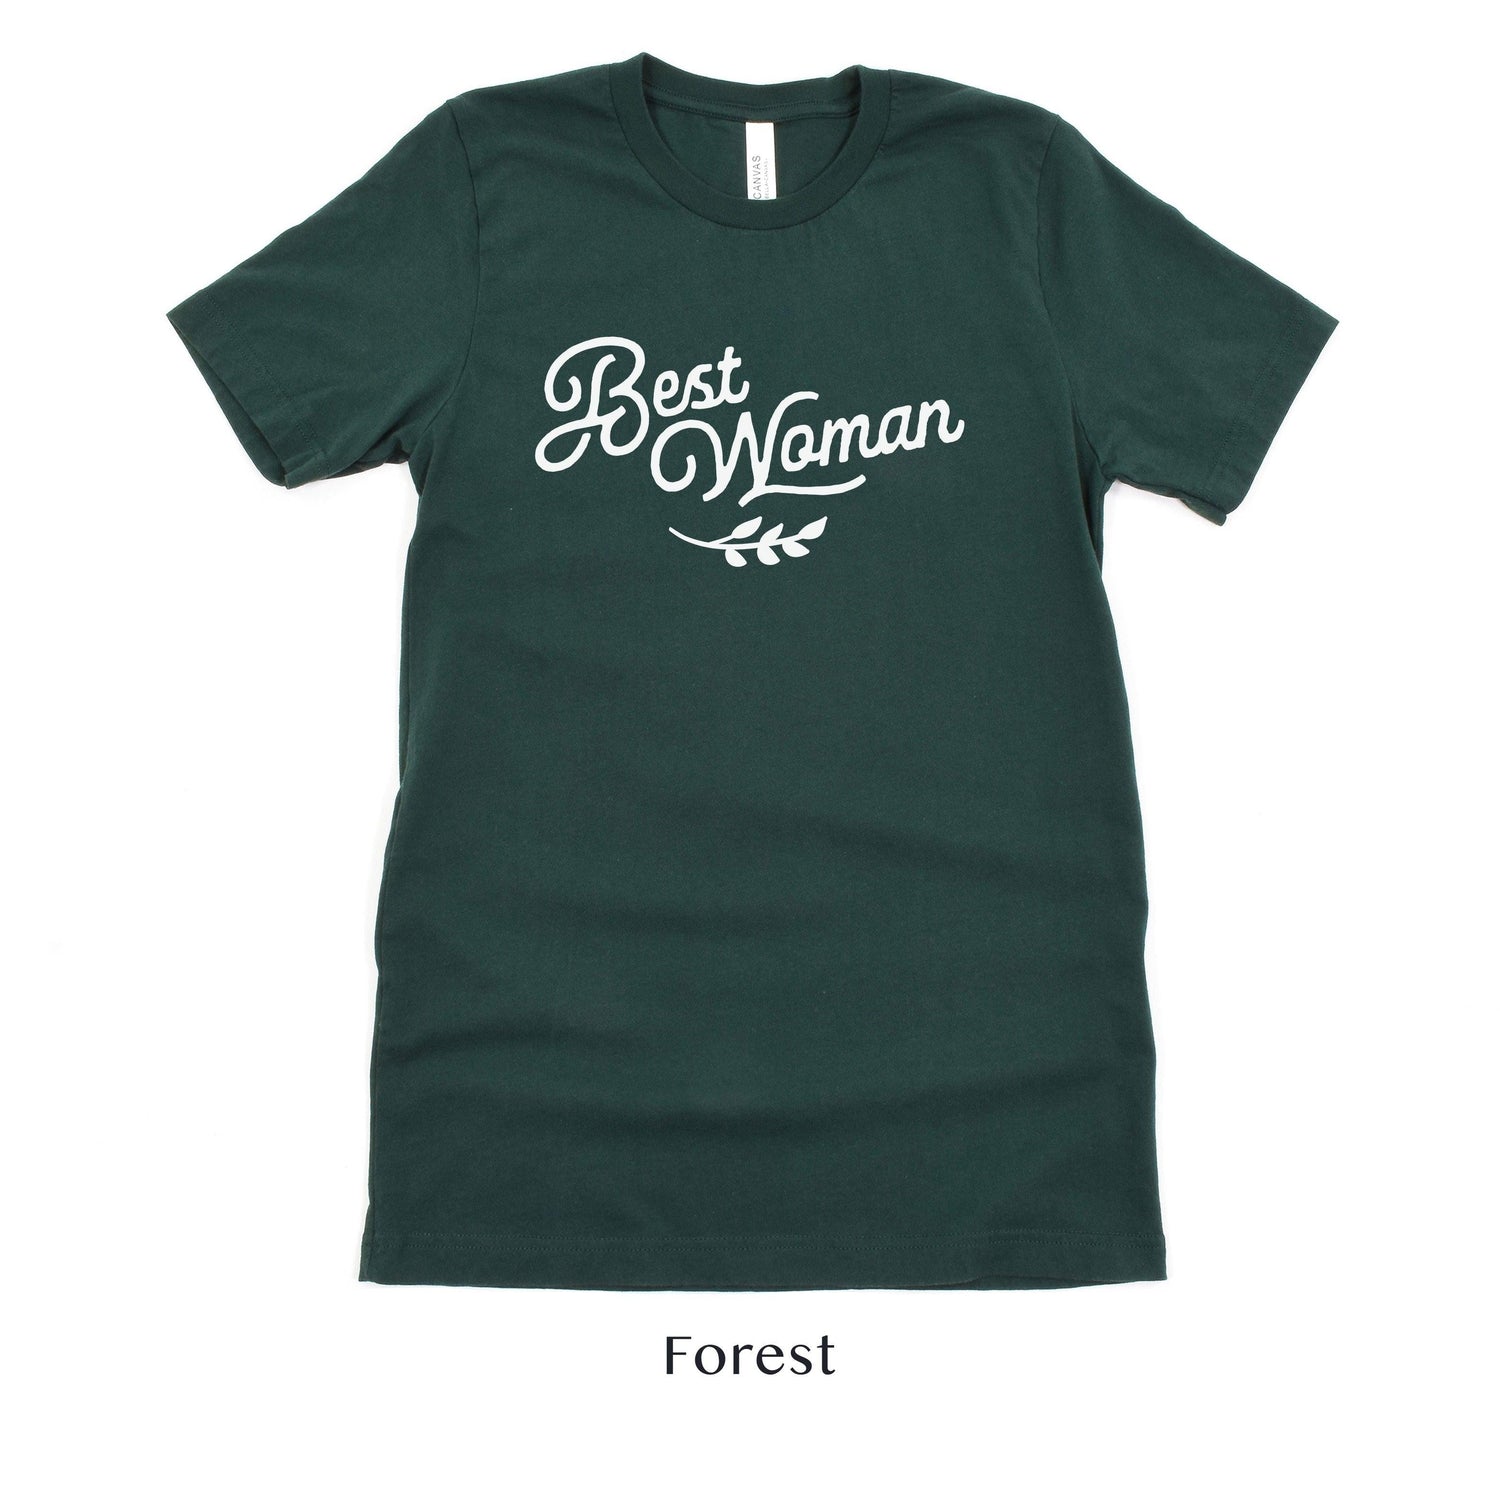 Best Woman Short-Sleeve Tee - Plus Sizes Available by Oaklynn Lane - forest green bridesmaid shirt - juniper